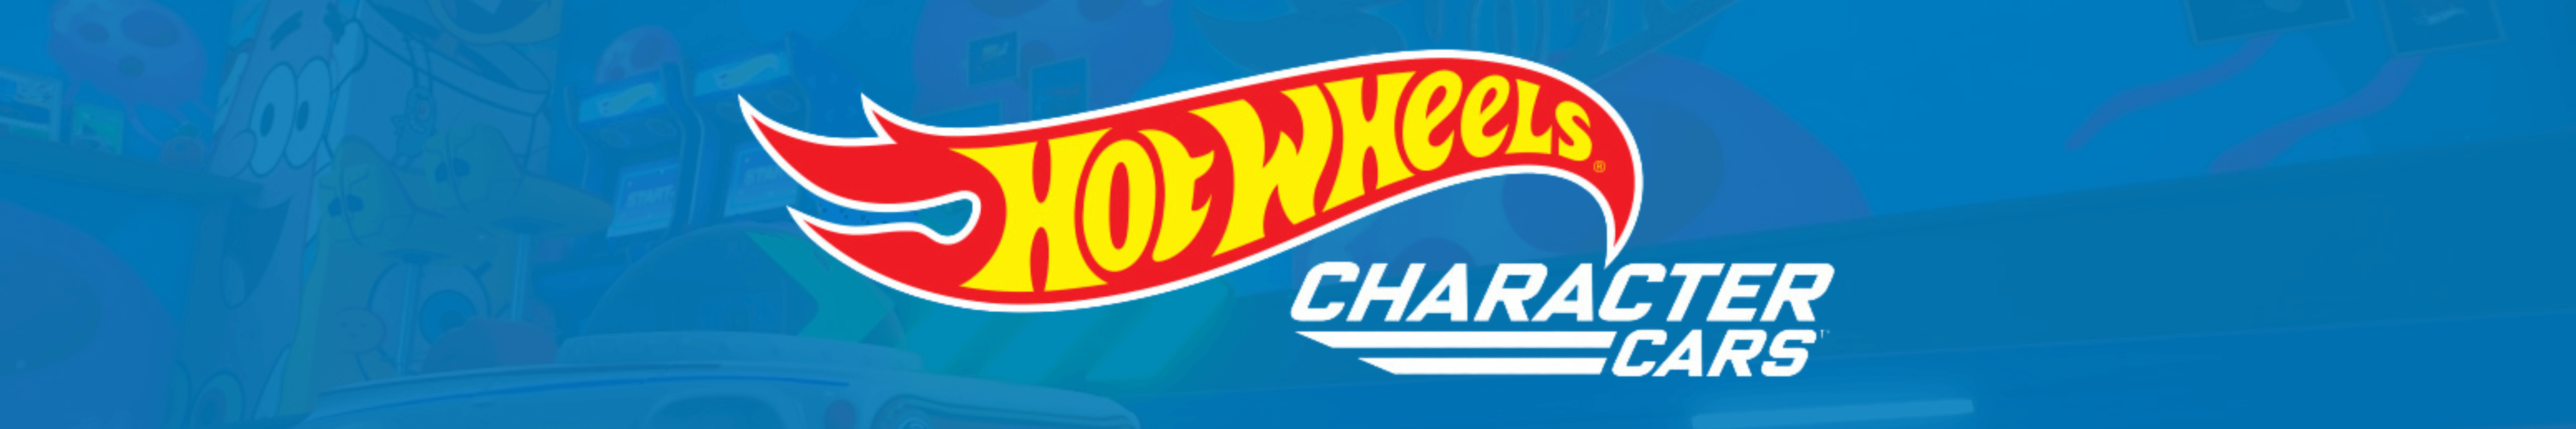 hot wheels character cars banner